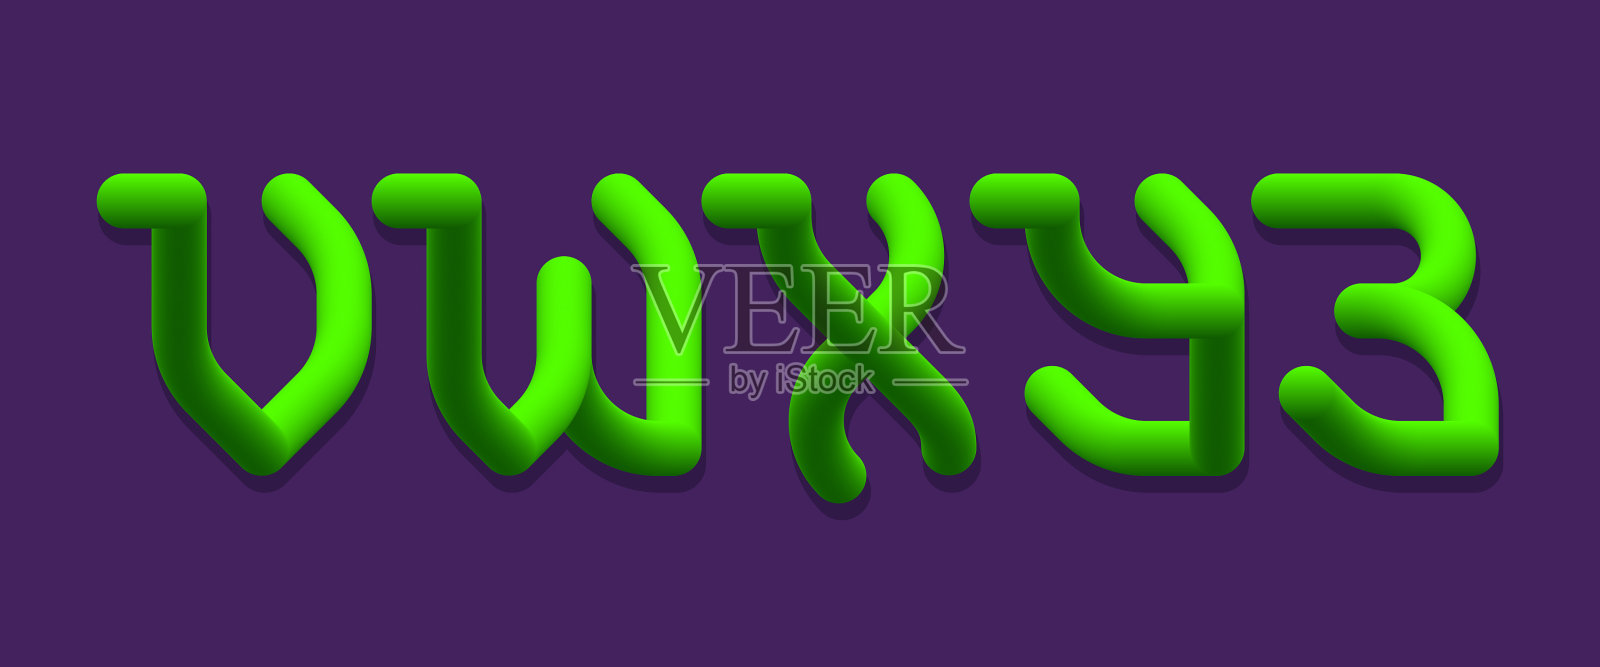 V w x y z绿色渐变3d字母发光插画图片素材